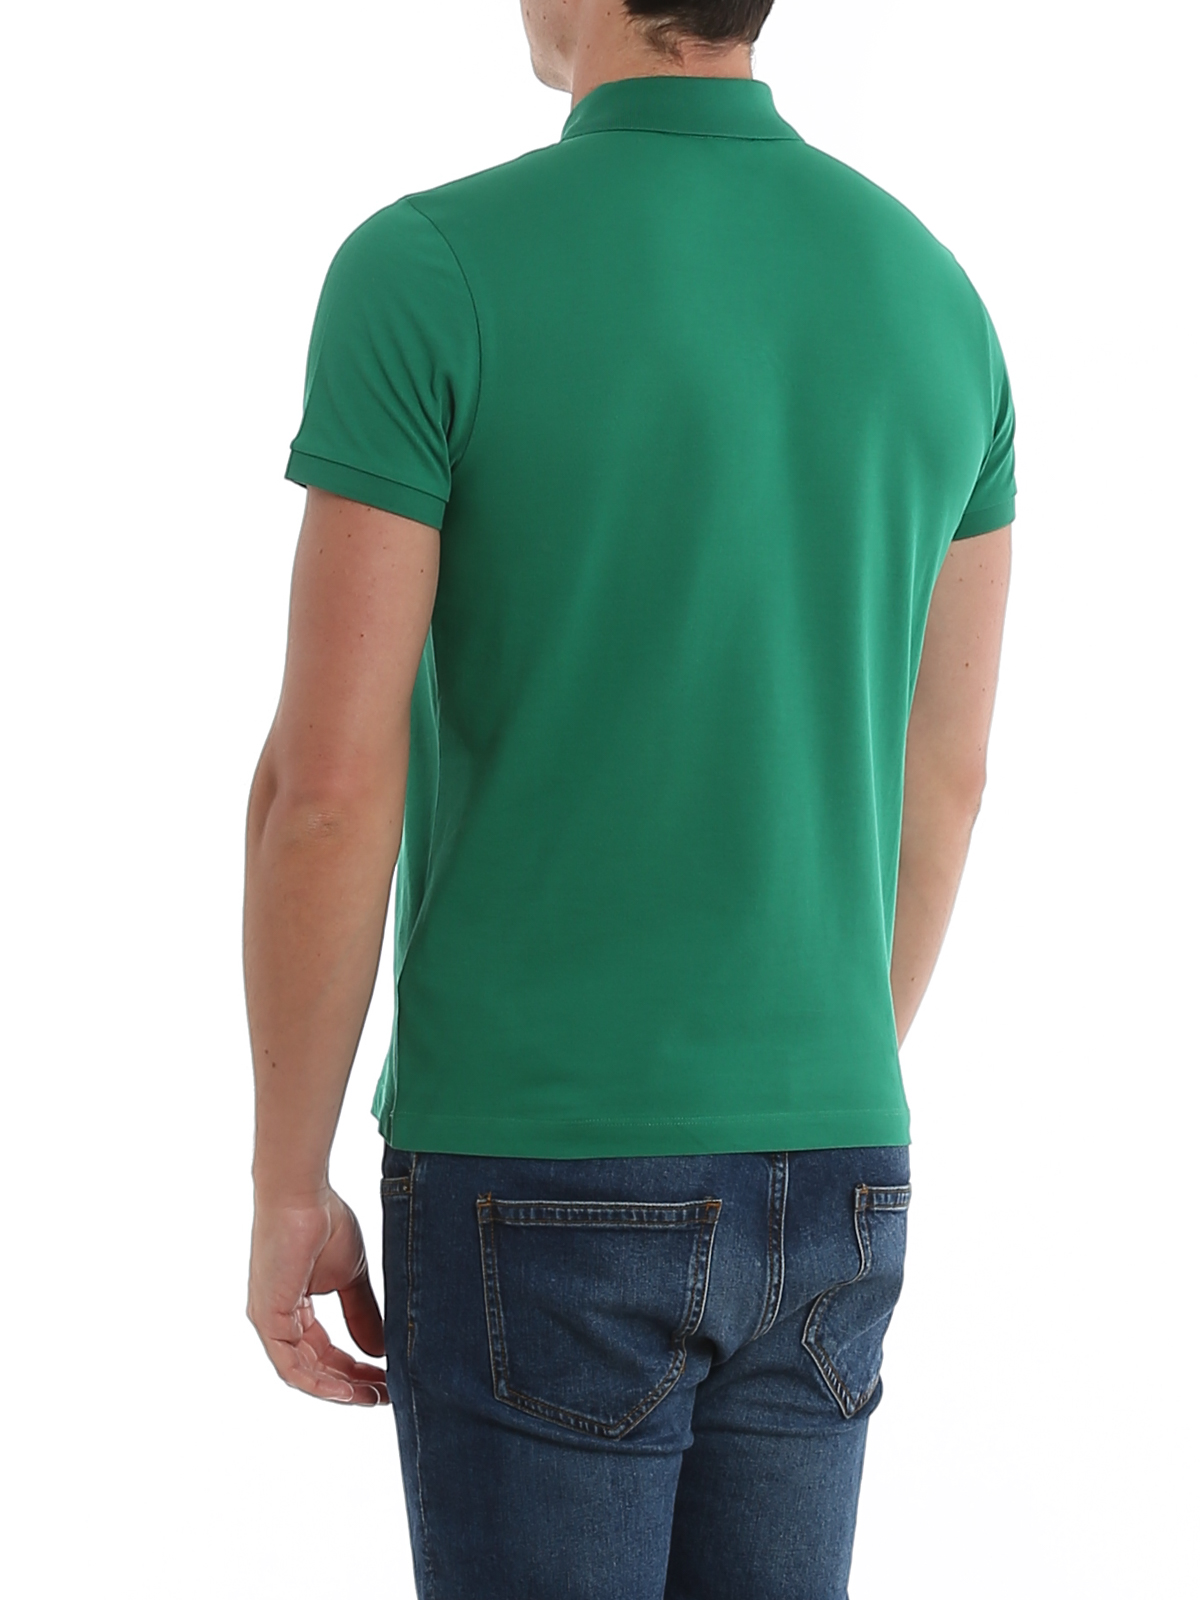 Moncler - ポロシャツ - 緑 - ポロシャツ - 8A71083921835